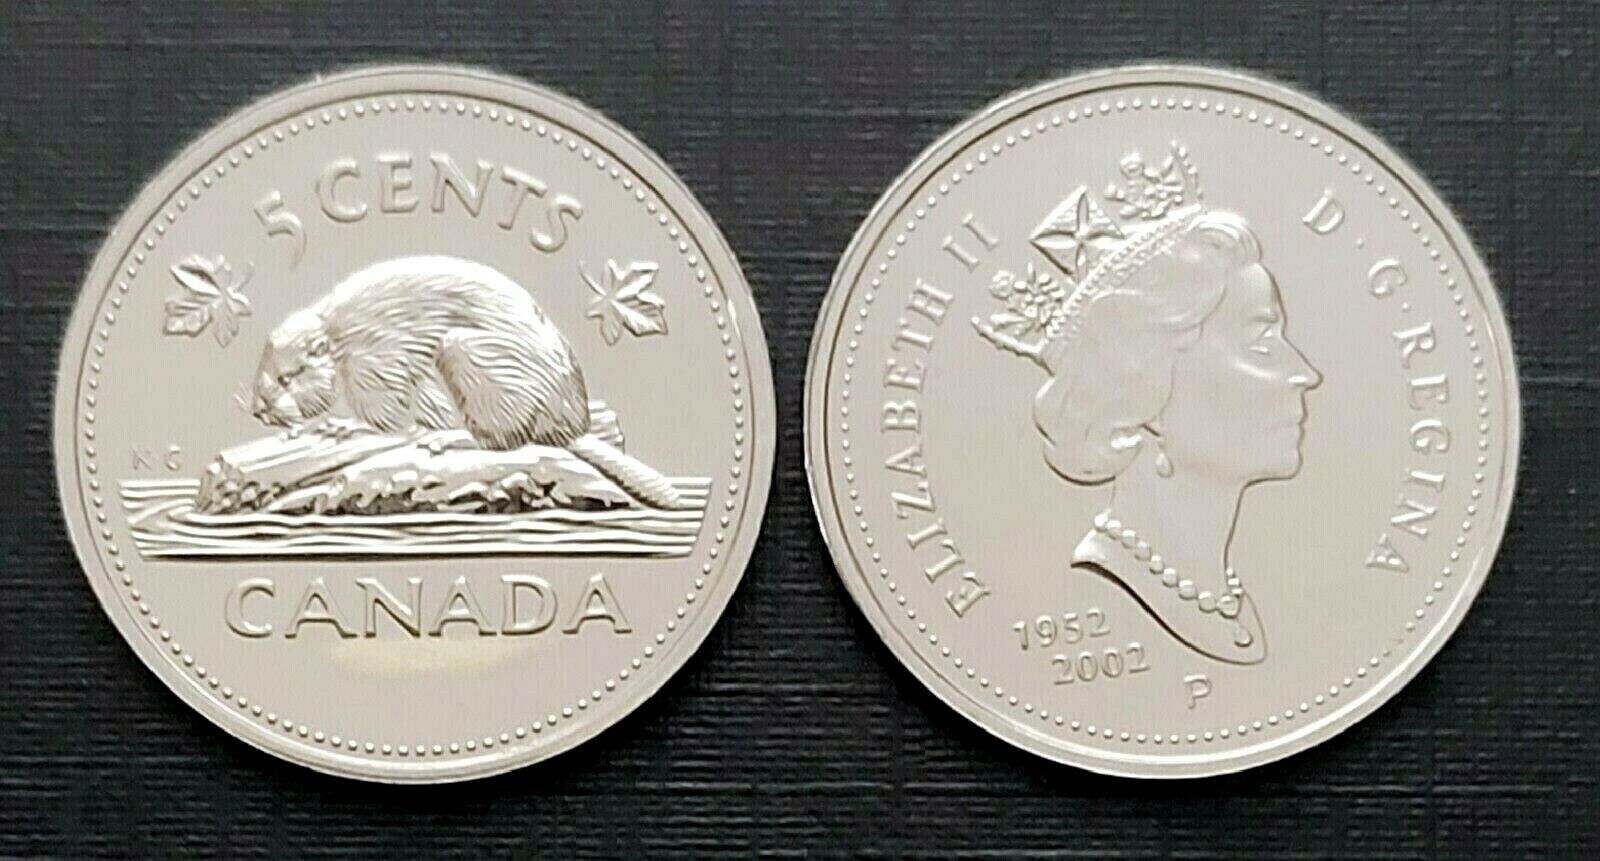 Canada 1952 - 2002P QEII Jubilee Proof Like Five Cent Piece!!